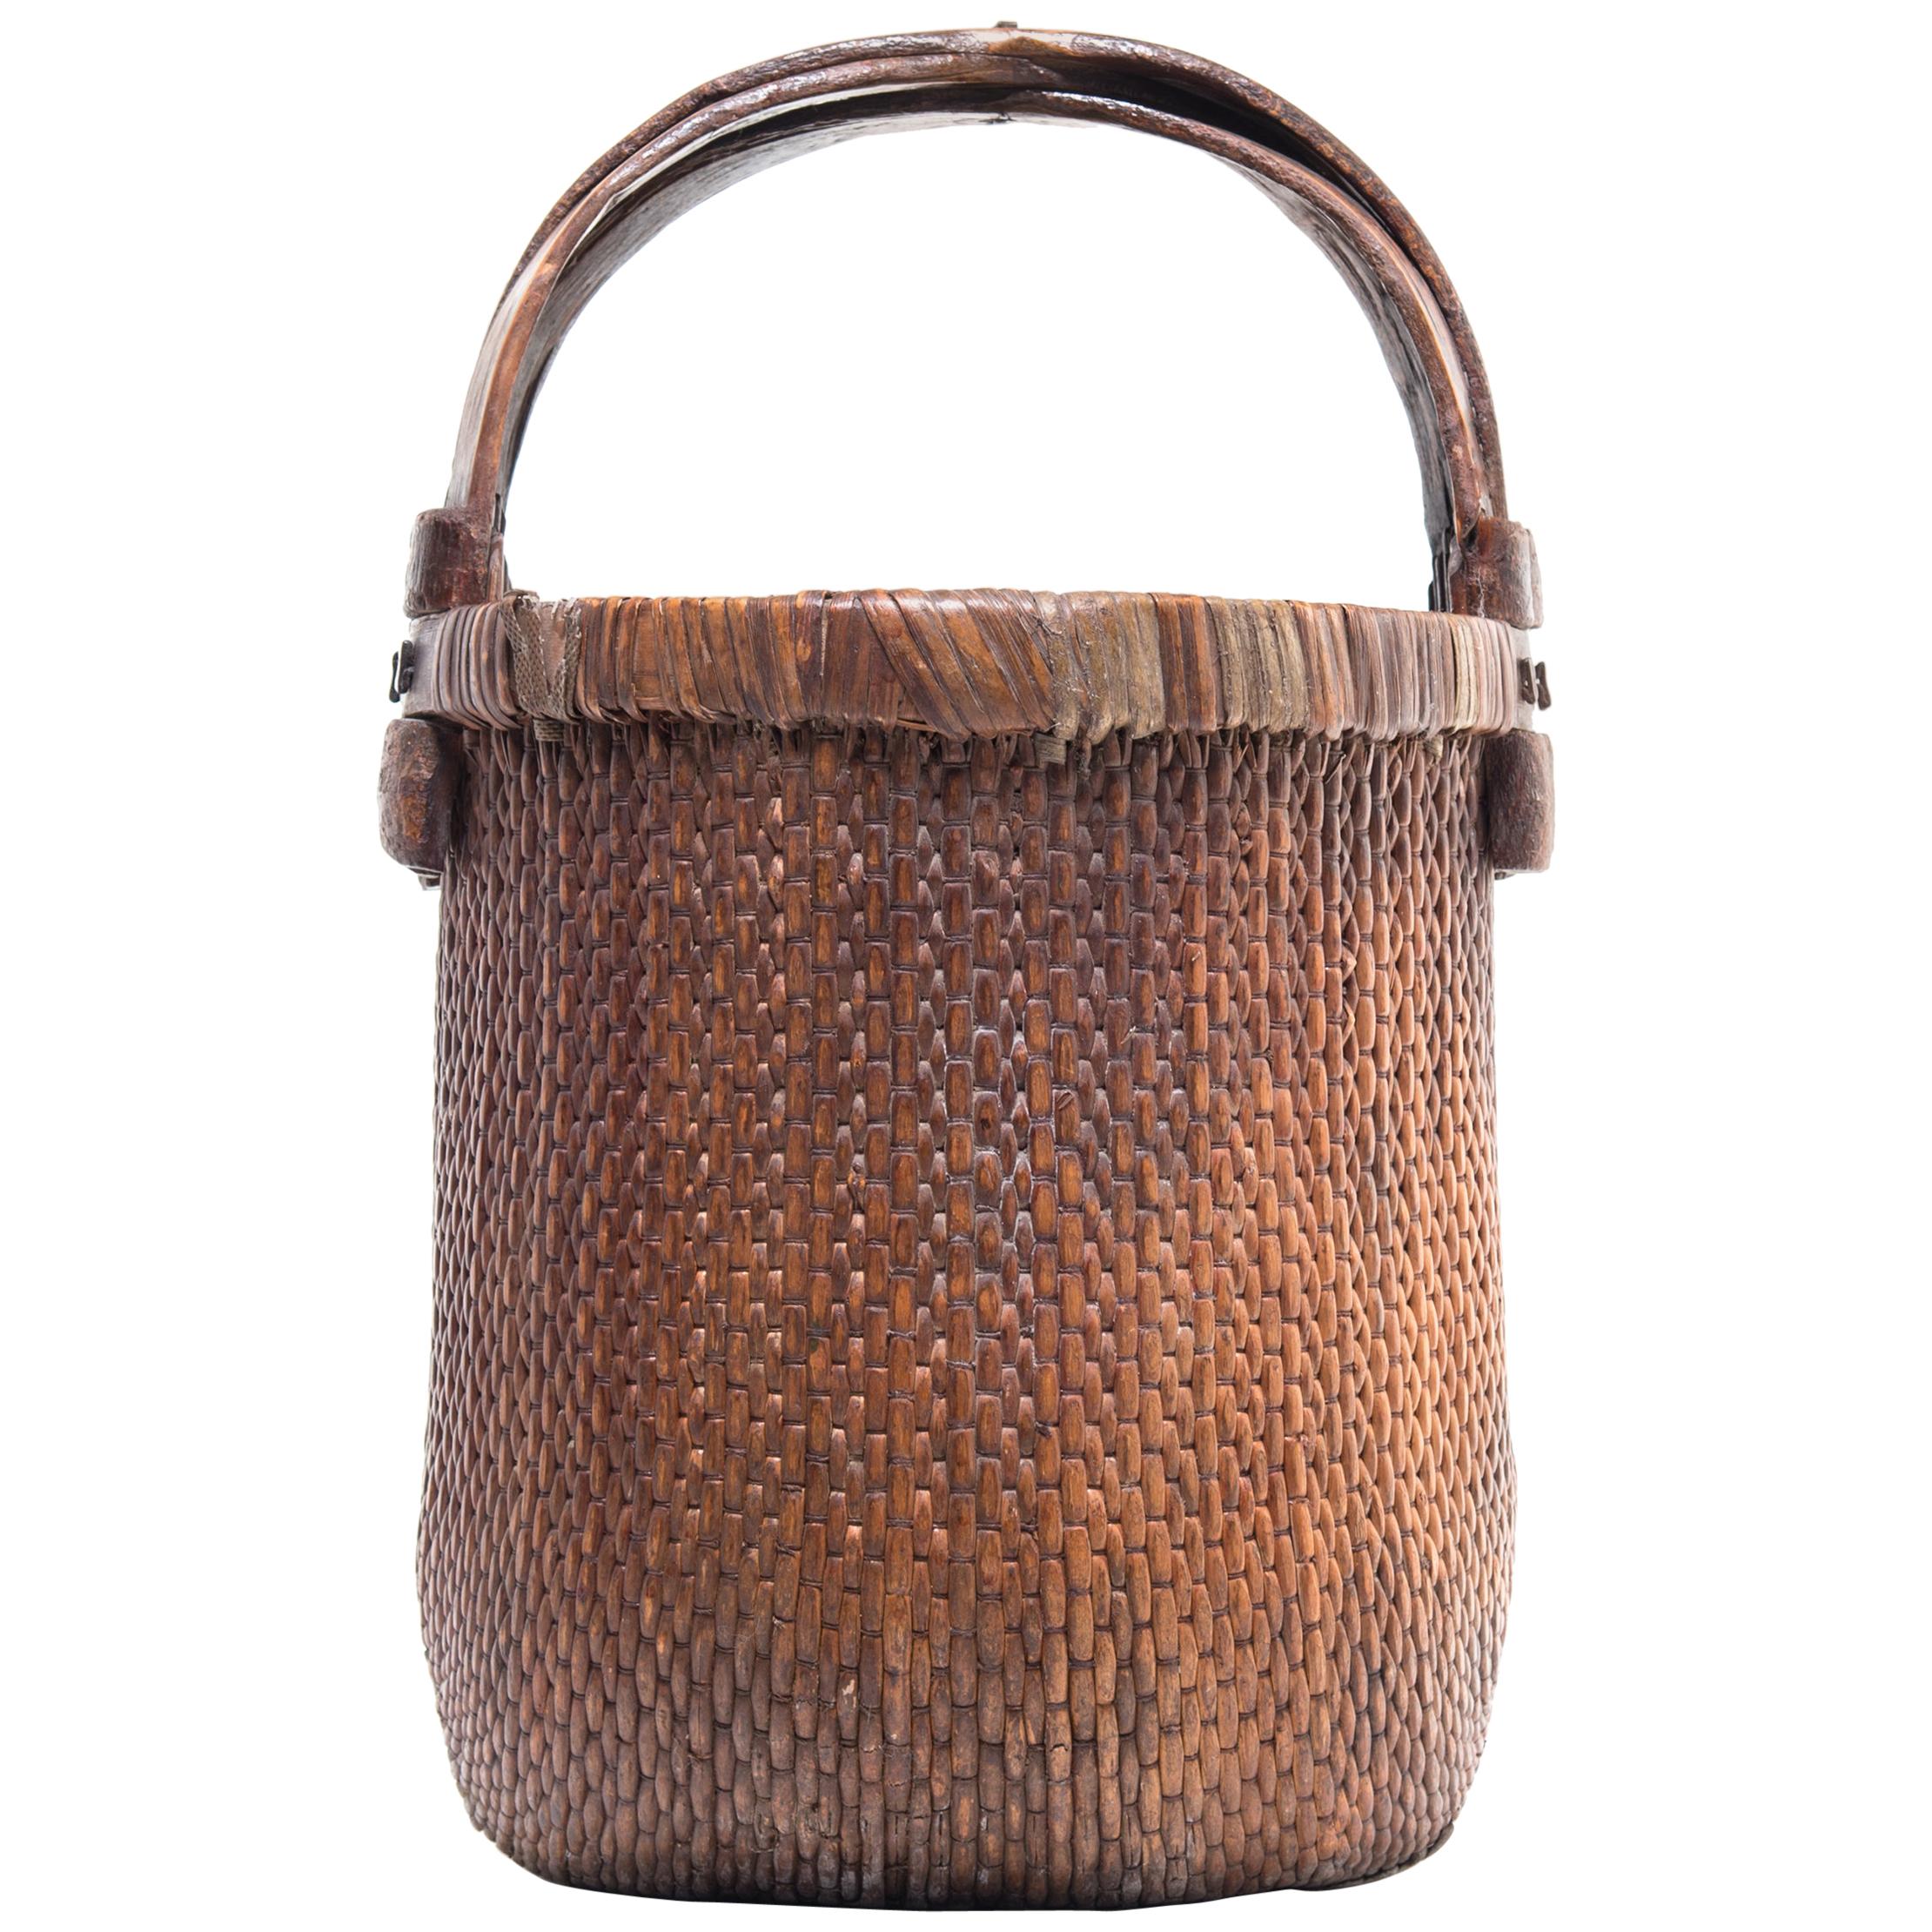 Chinese Bent Handle Willow Basket, circa 1900